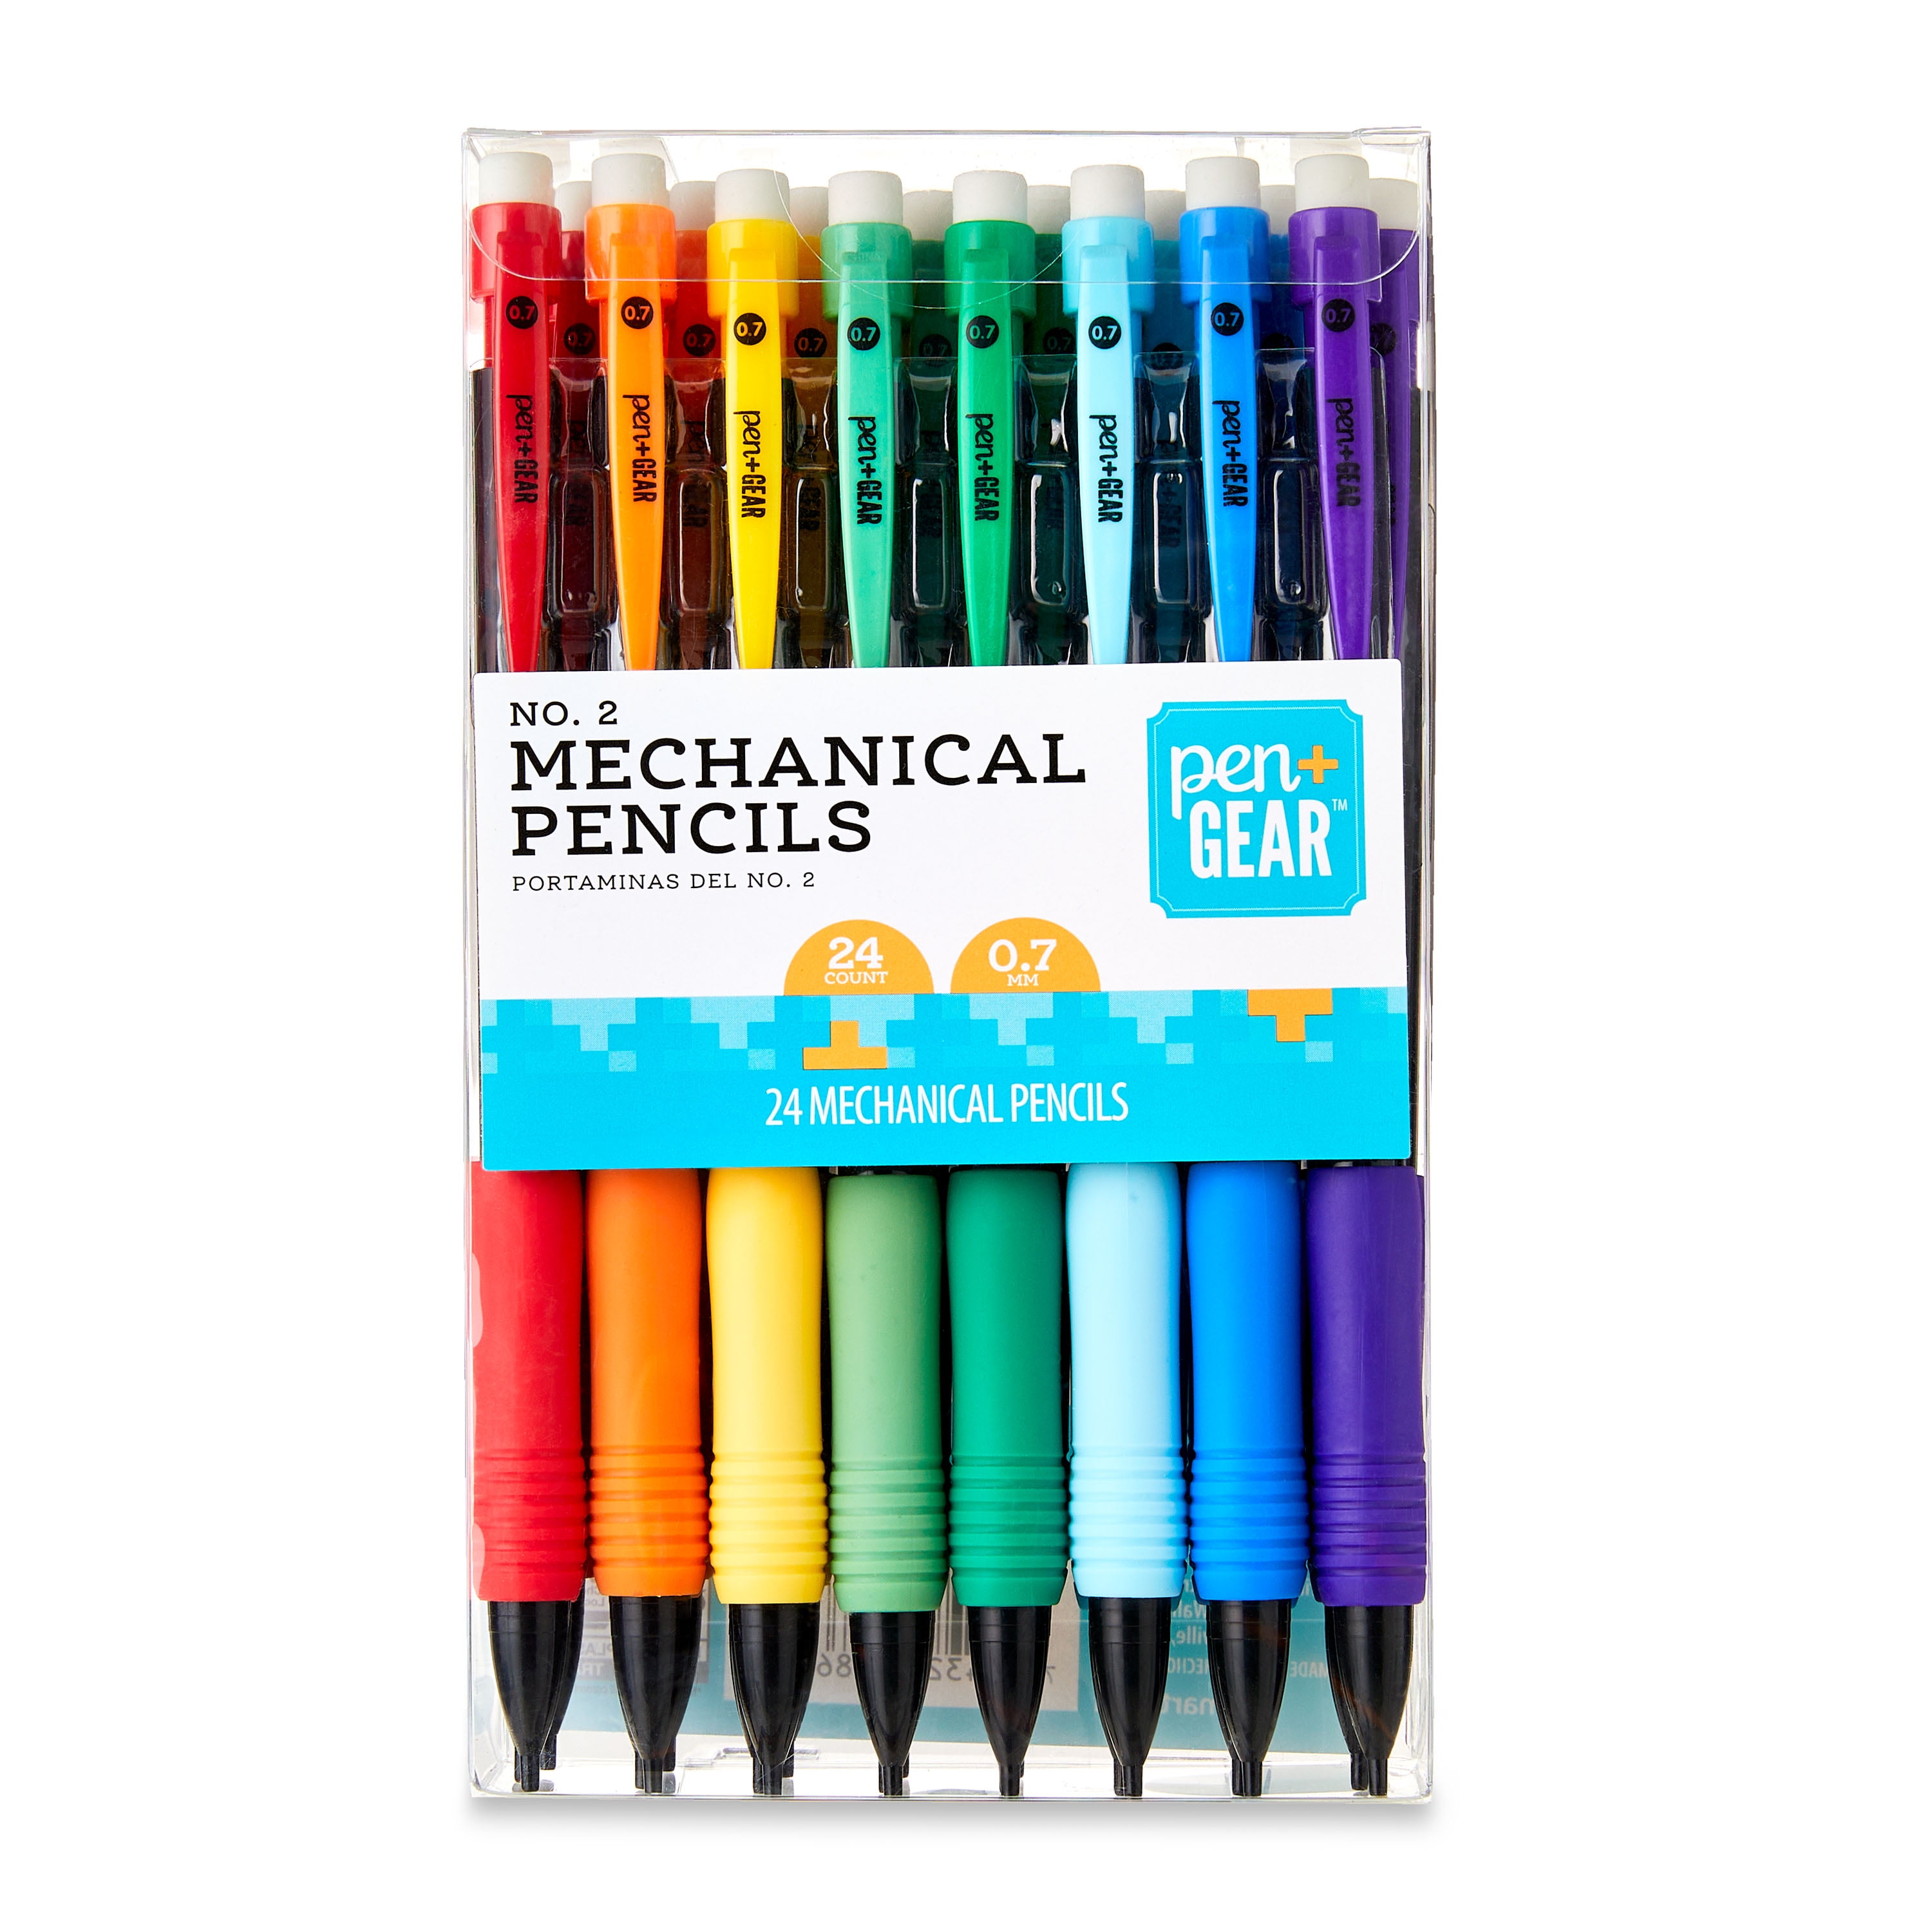 Pen+Gear #2 Mechanical Pencils, Black Lead, 24 Pack